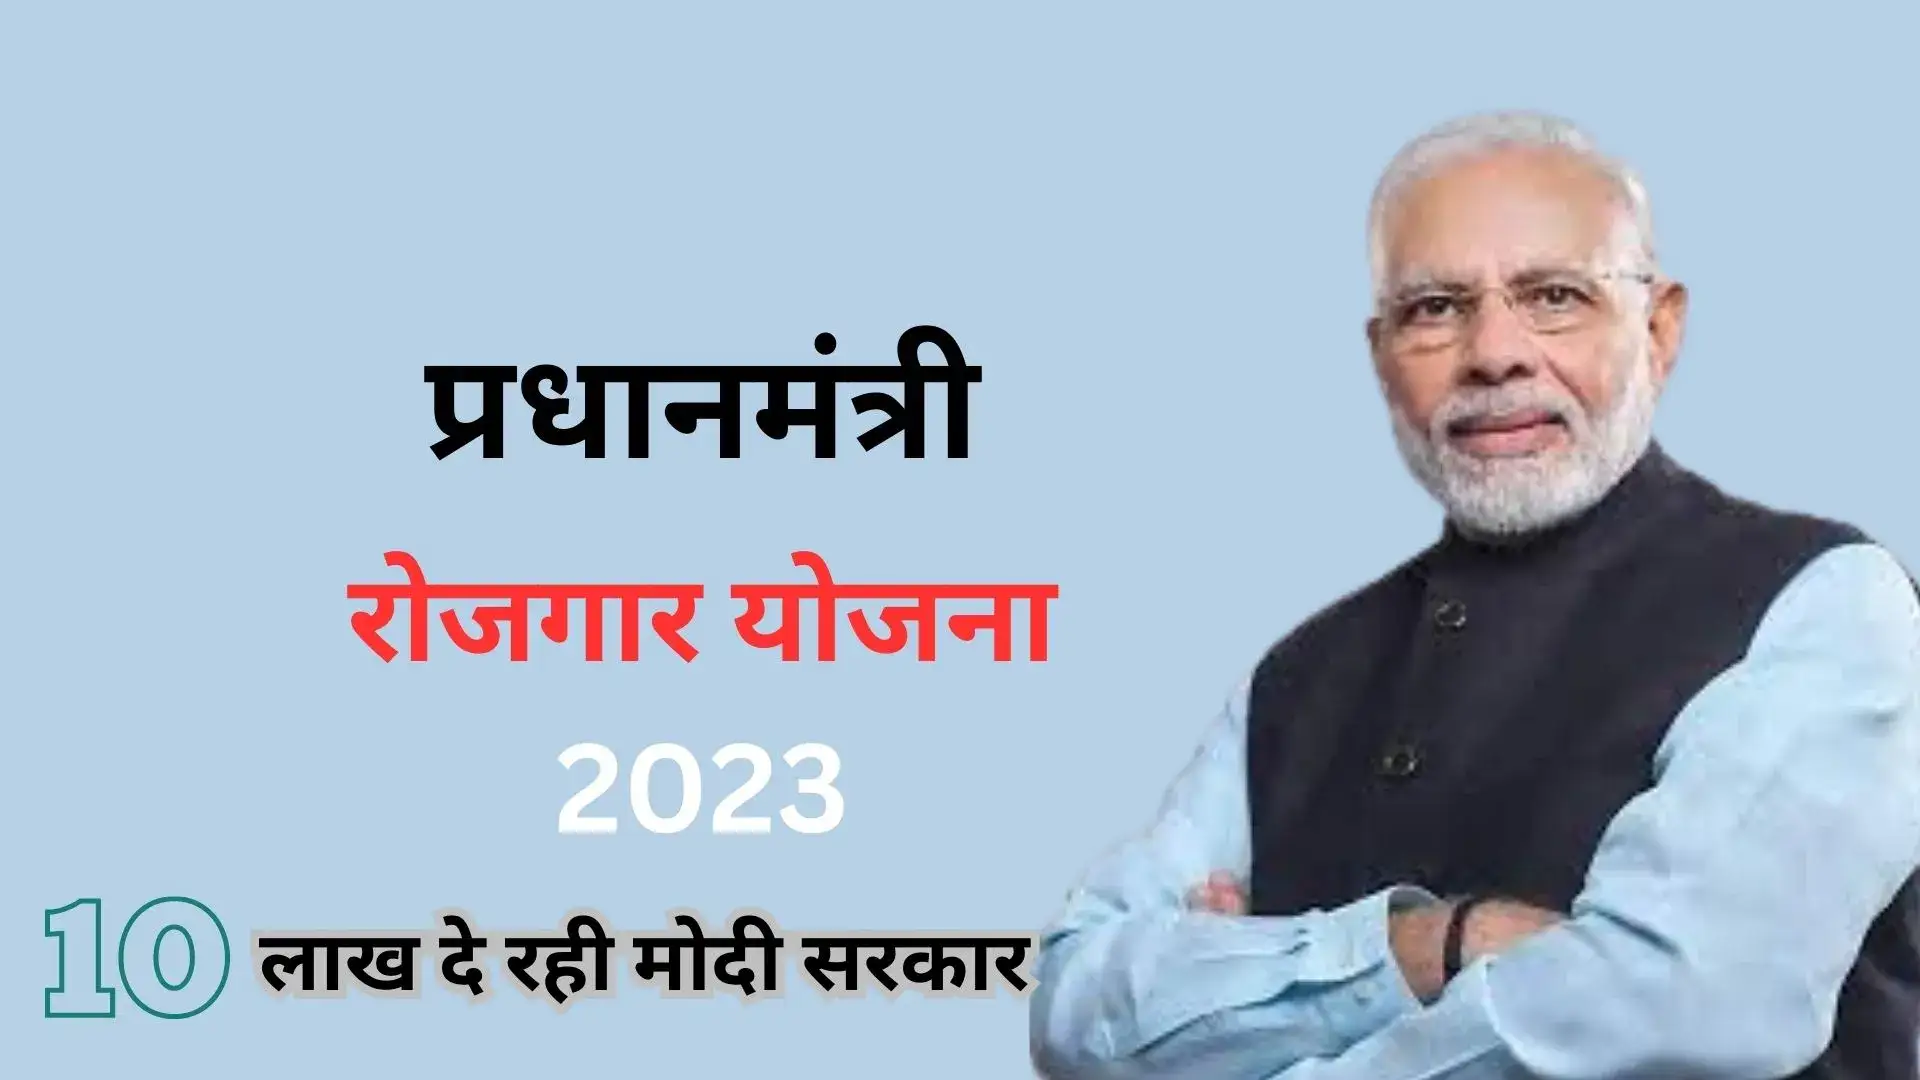 प्रधानमंत्री रोजगार योजना 2023: आवेदन प्रक्रिया, पात्रता और लाभ